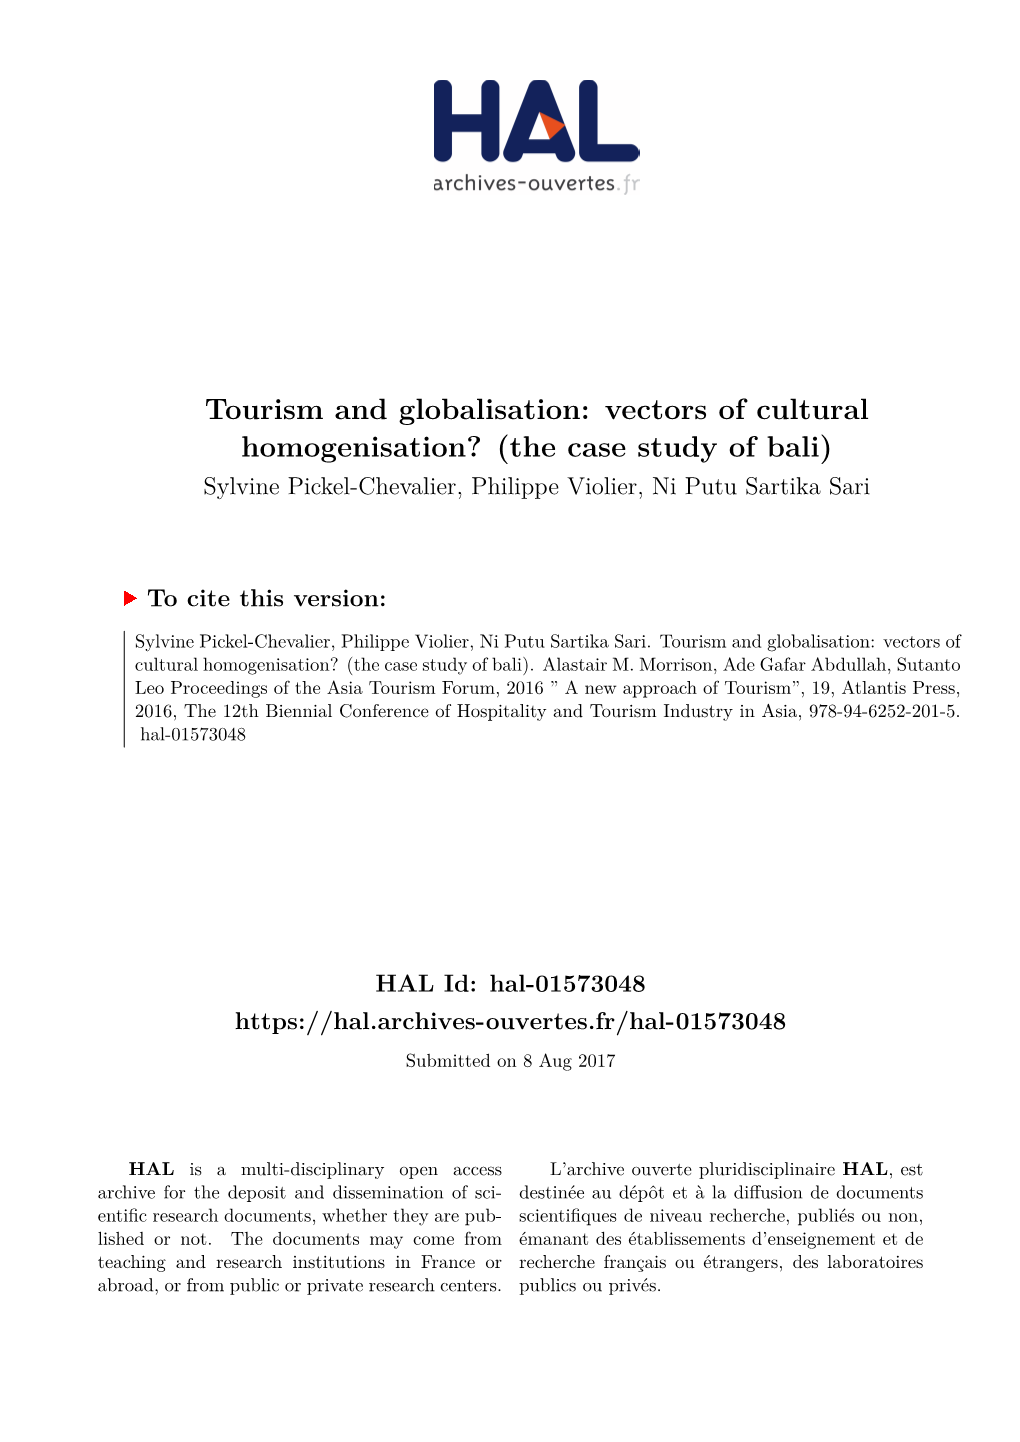 Tourism and Globalisation: Vectors of Cultural Homogenisation? (The Case Study of Bali) Sylvine Pickel-Chevalier, Philippe Violier, Ni Putu Sartika Sari